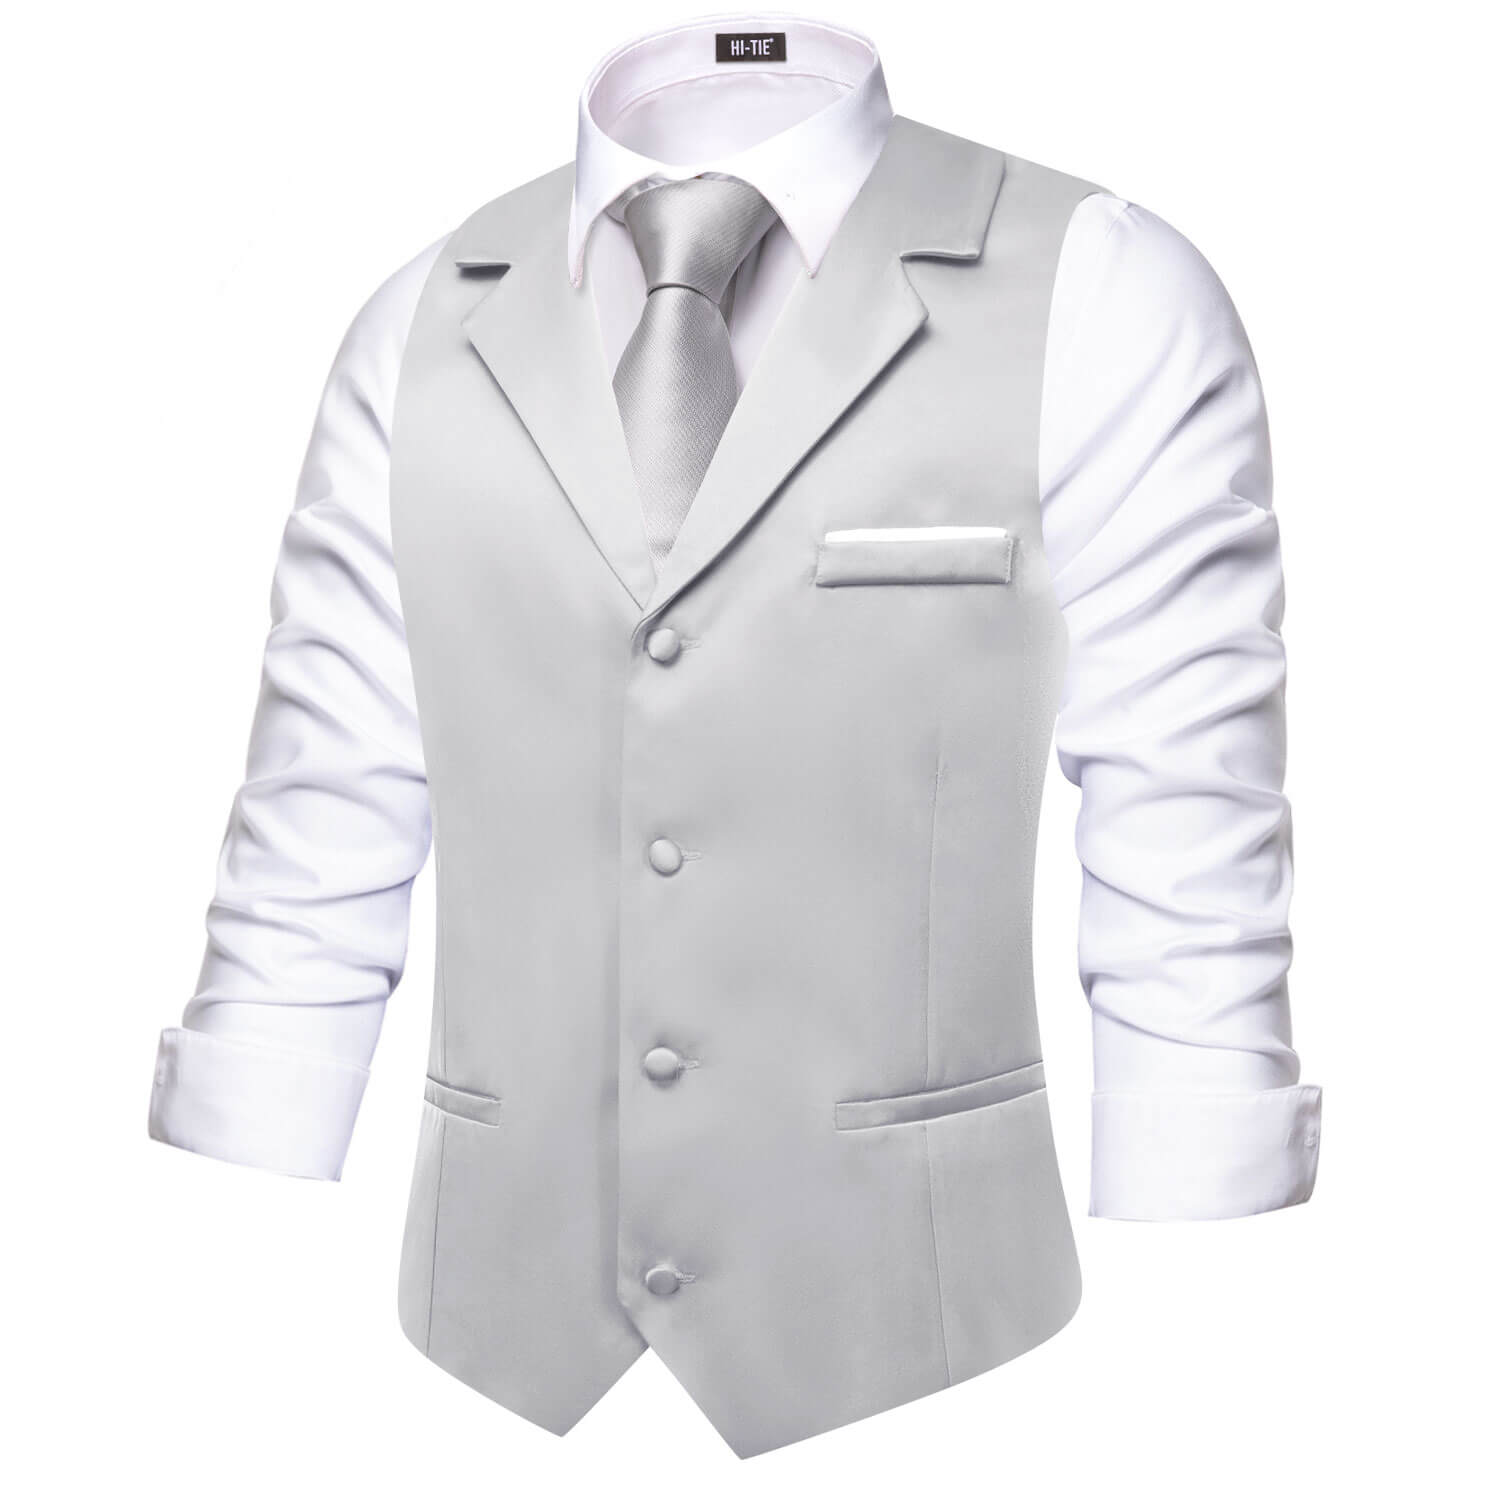 Hi-Tie Sliver Grey Waistcoat Solid Notch lapels Men's Vest